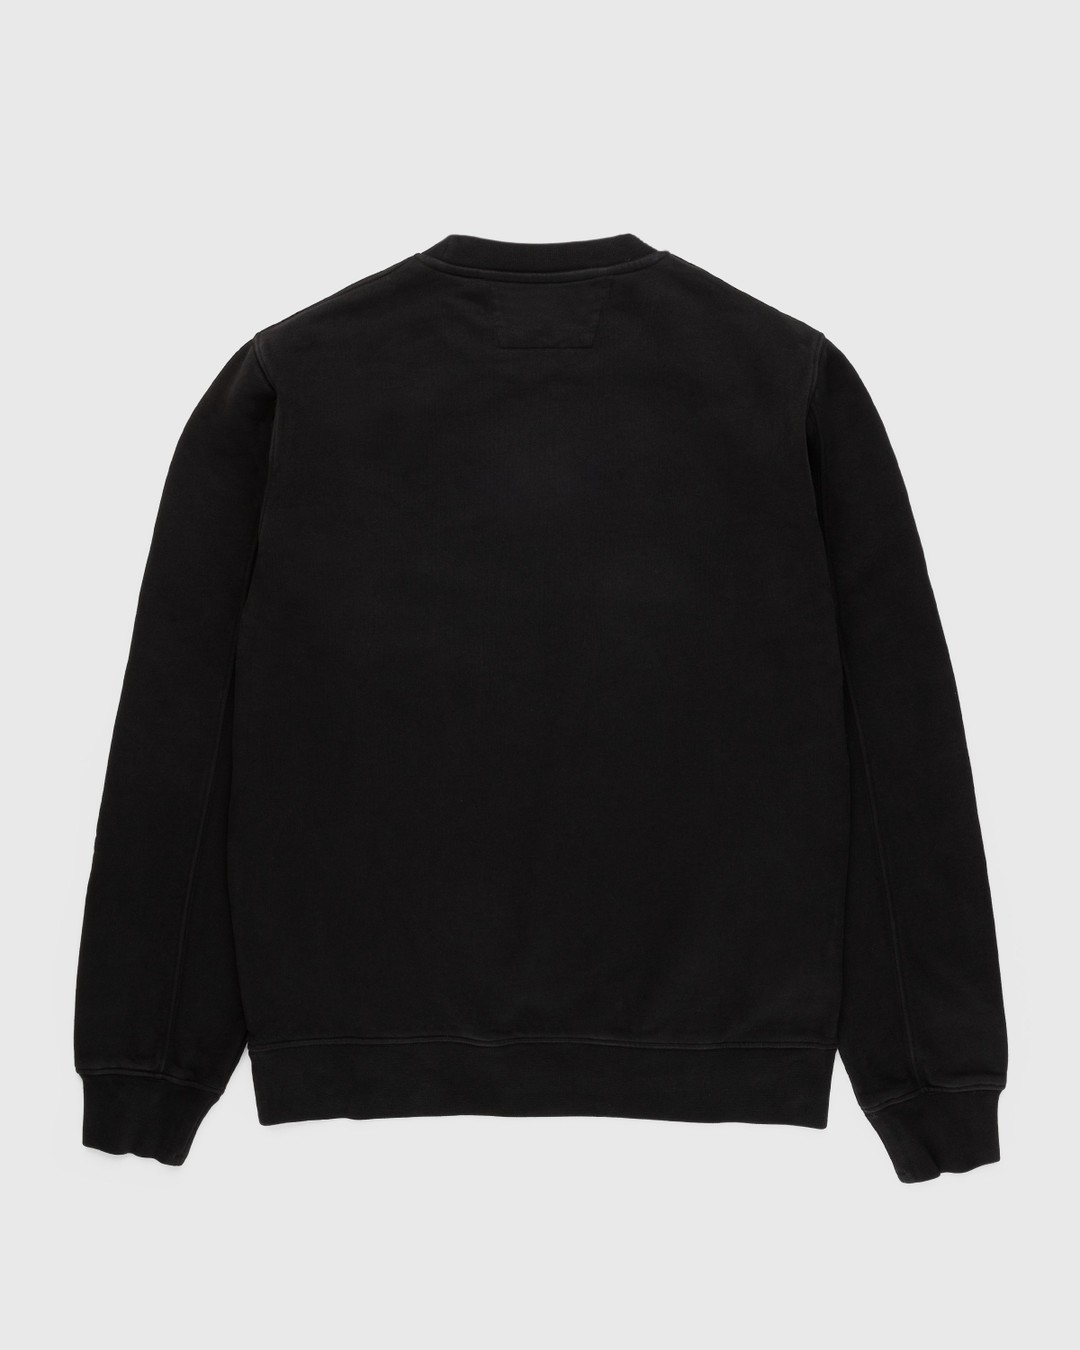 C.P. Company – Diagonal Raised Fleece Crewneck Sweatshirt Black - Sweatshirts - Black - Image 2